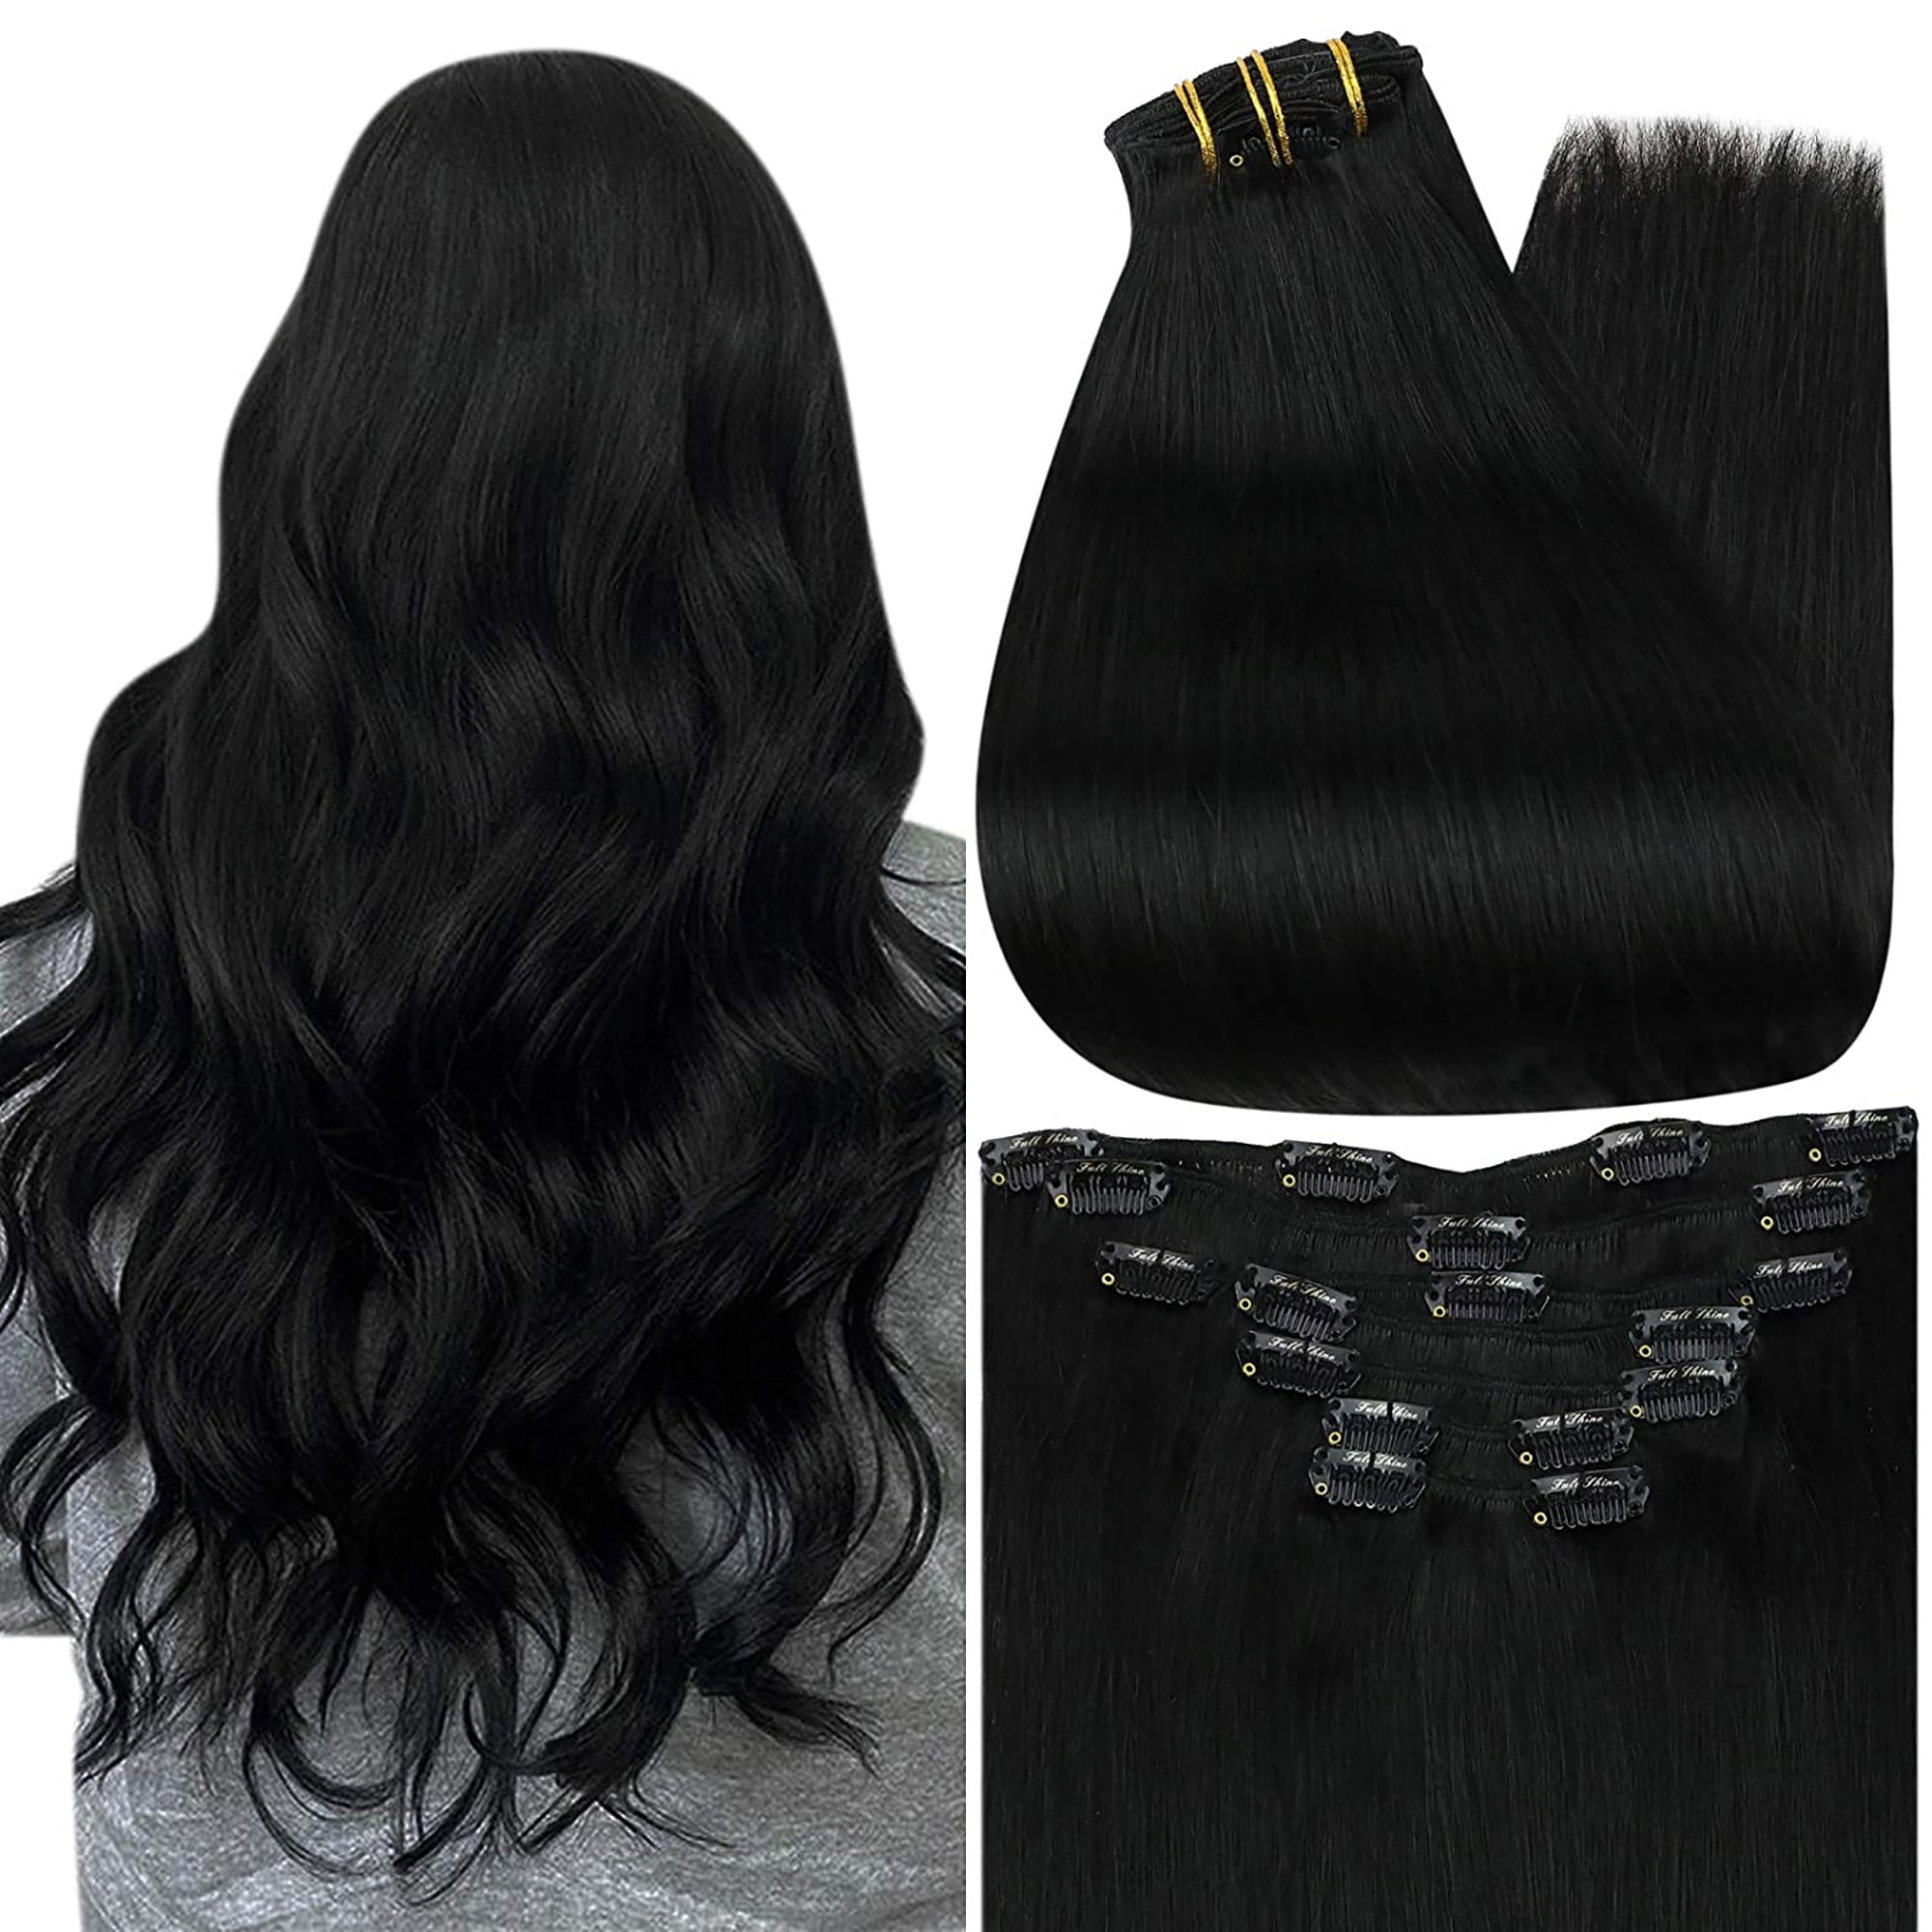 CS BEAUTY Hair Clip - Black, Big Size, 6 pcs